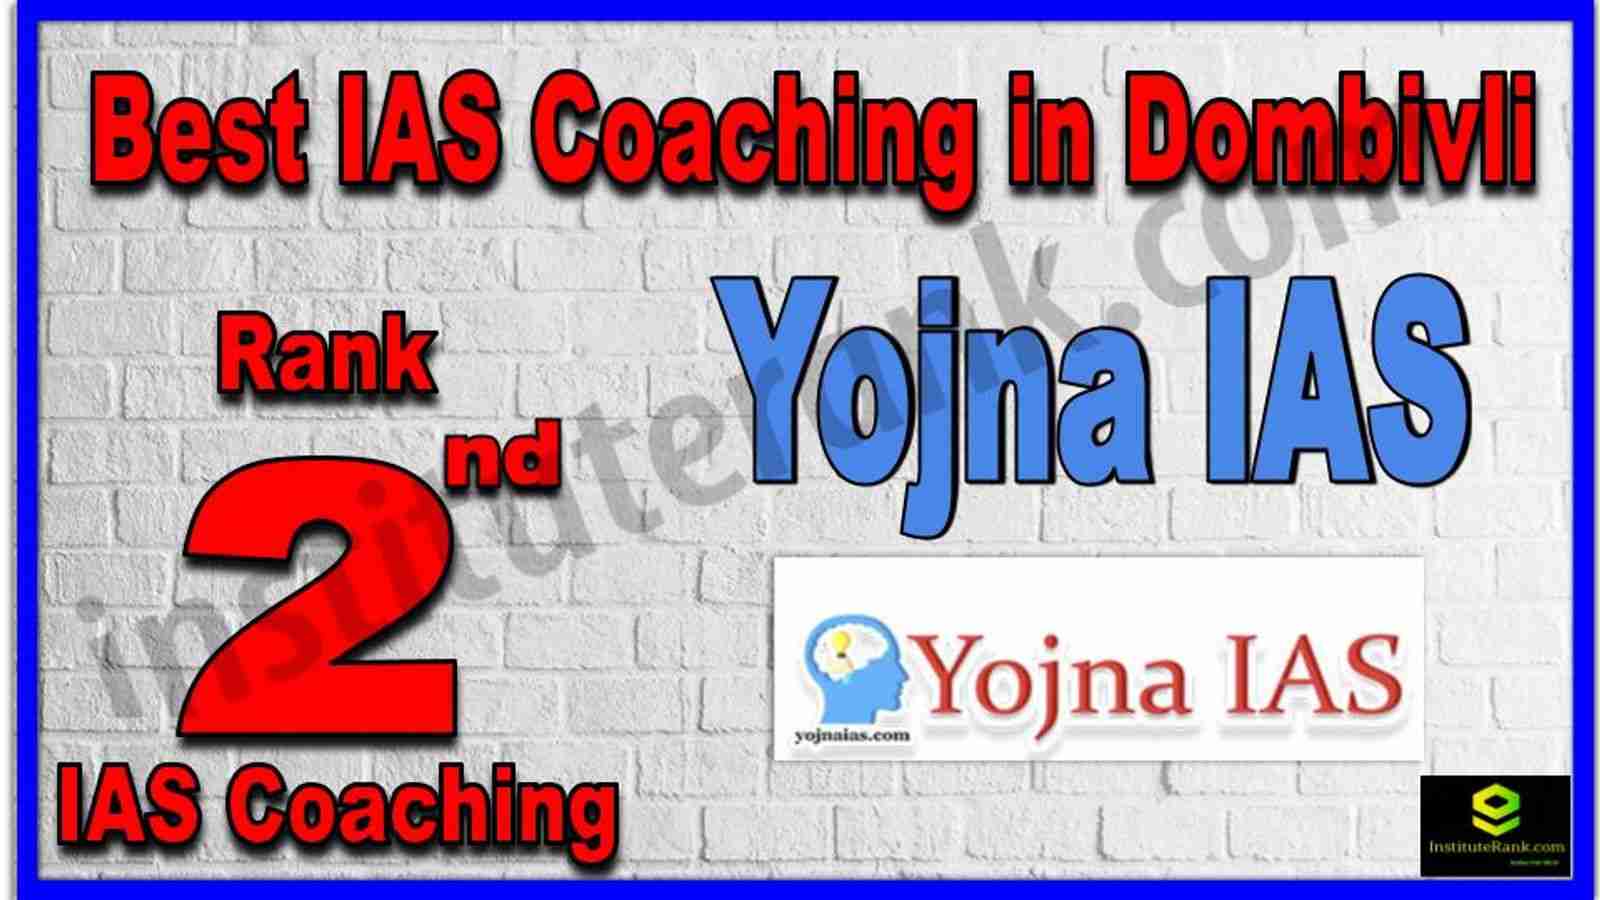 Rank 2nd Best IAS Coaching in Dombivli